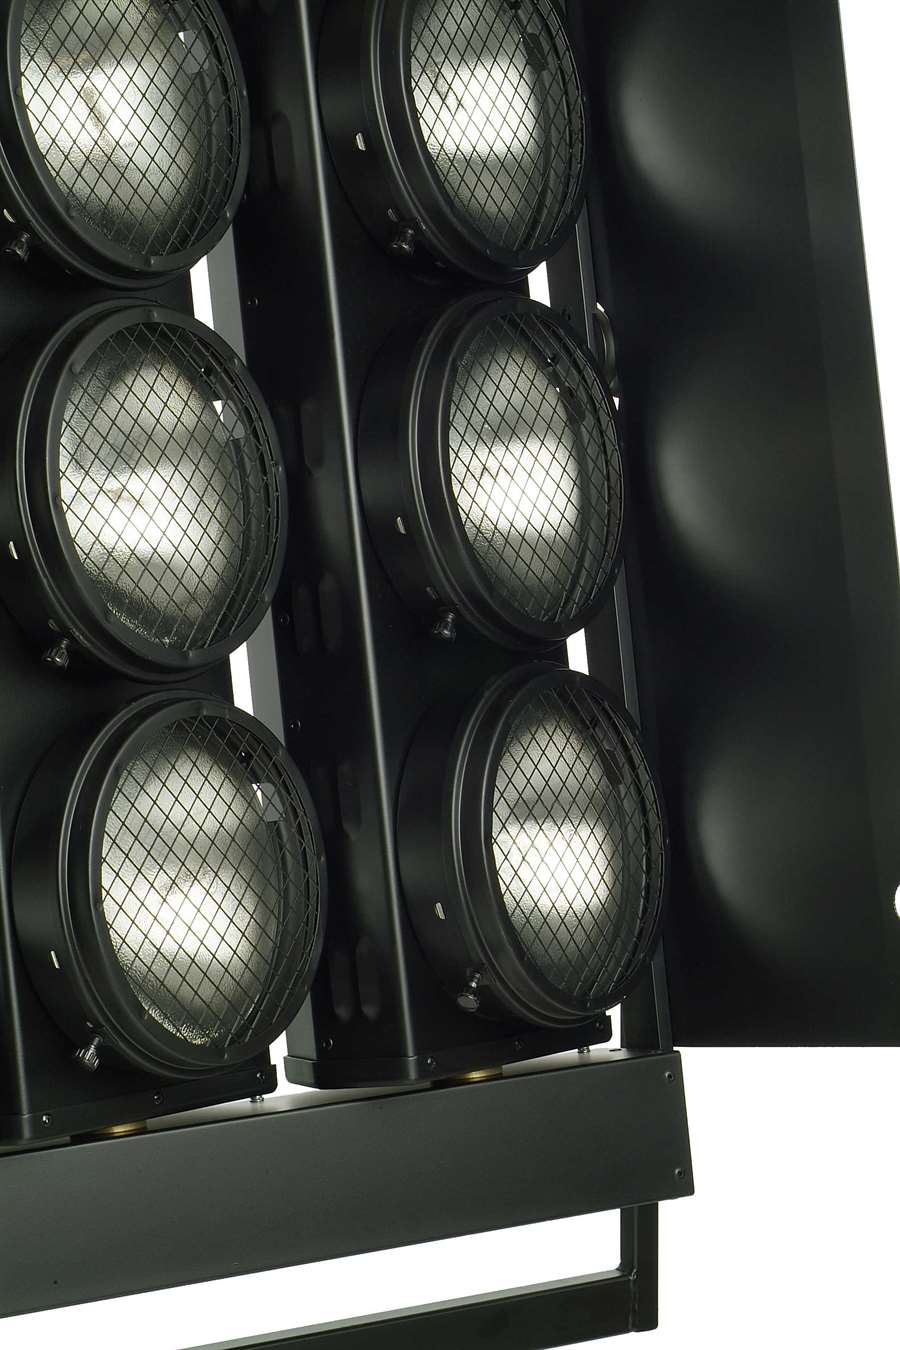 JUMBO FOR 12 PAR 64 LAMP – 1000 W - Cosmolight